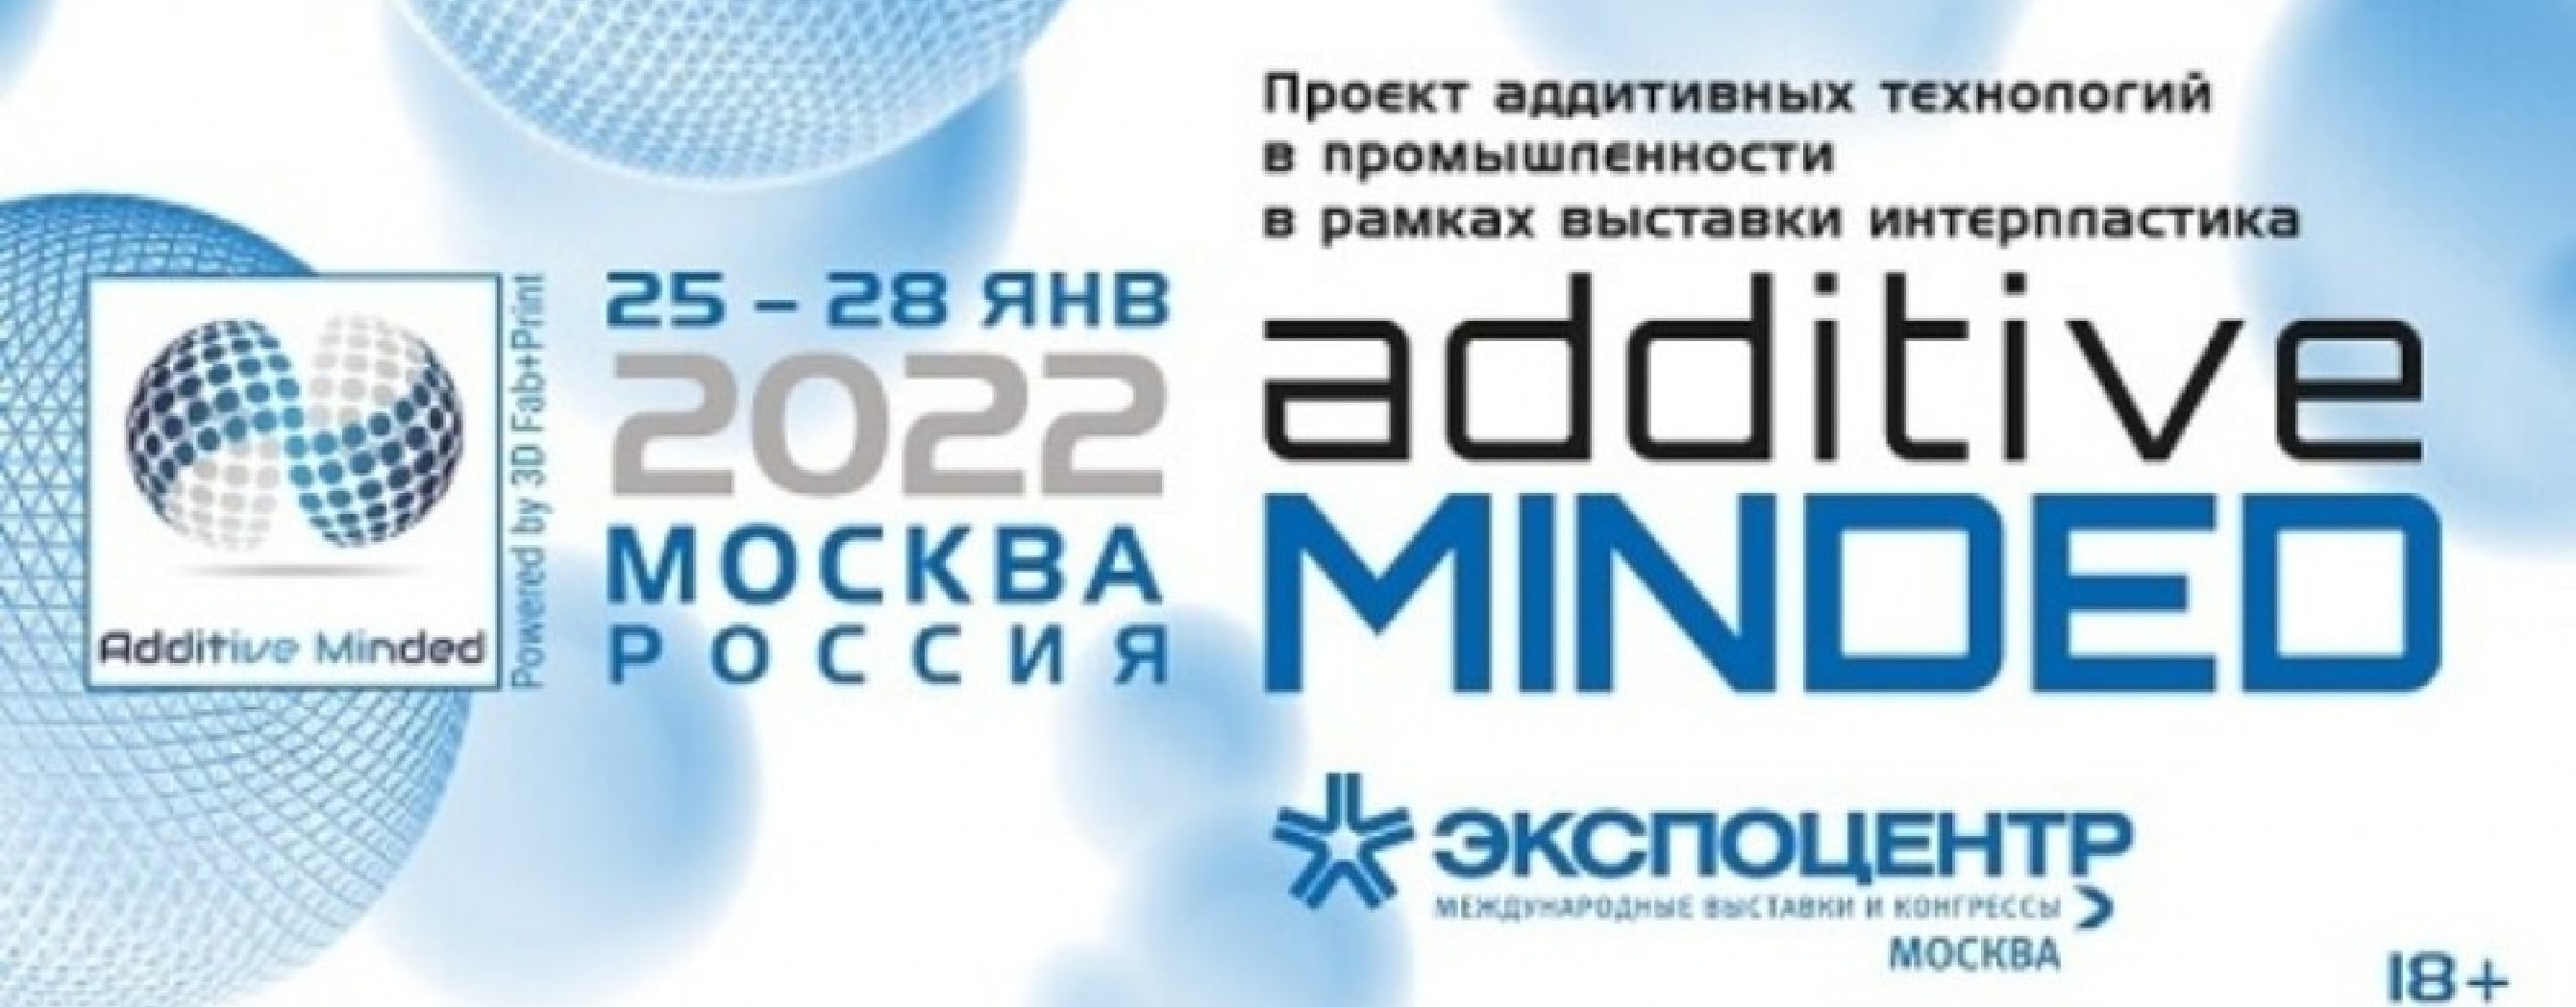 Проект аддитивных технологий «Additive Minded»